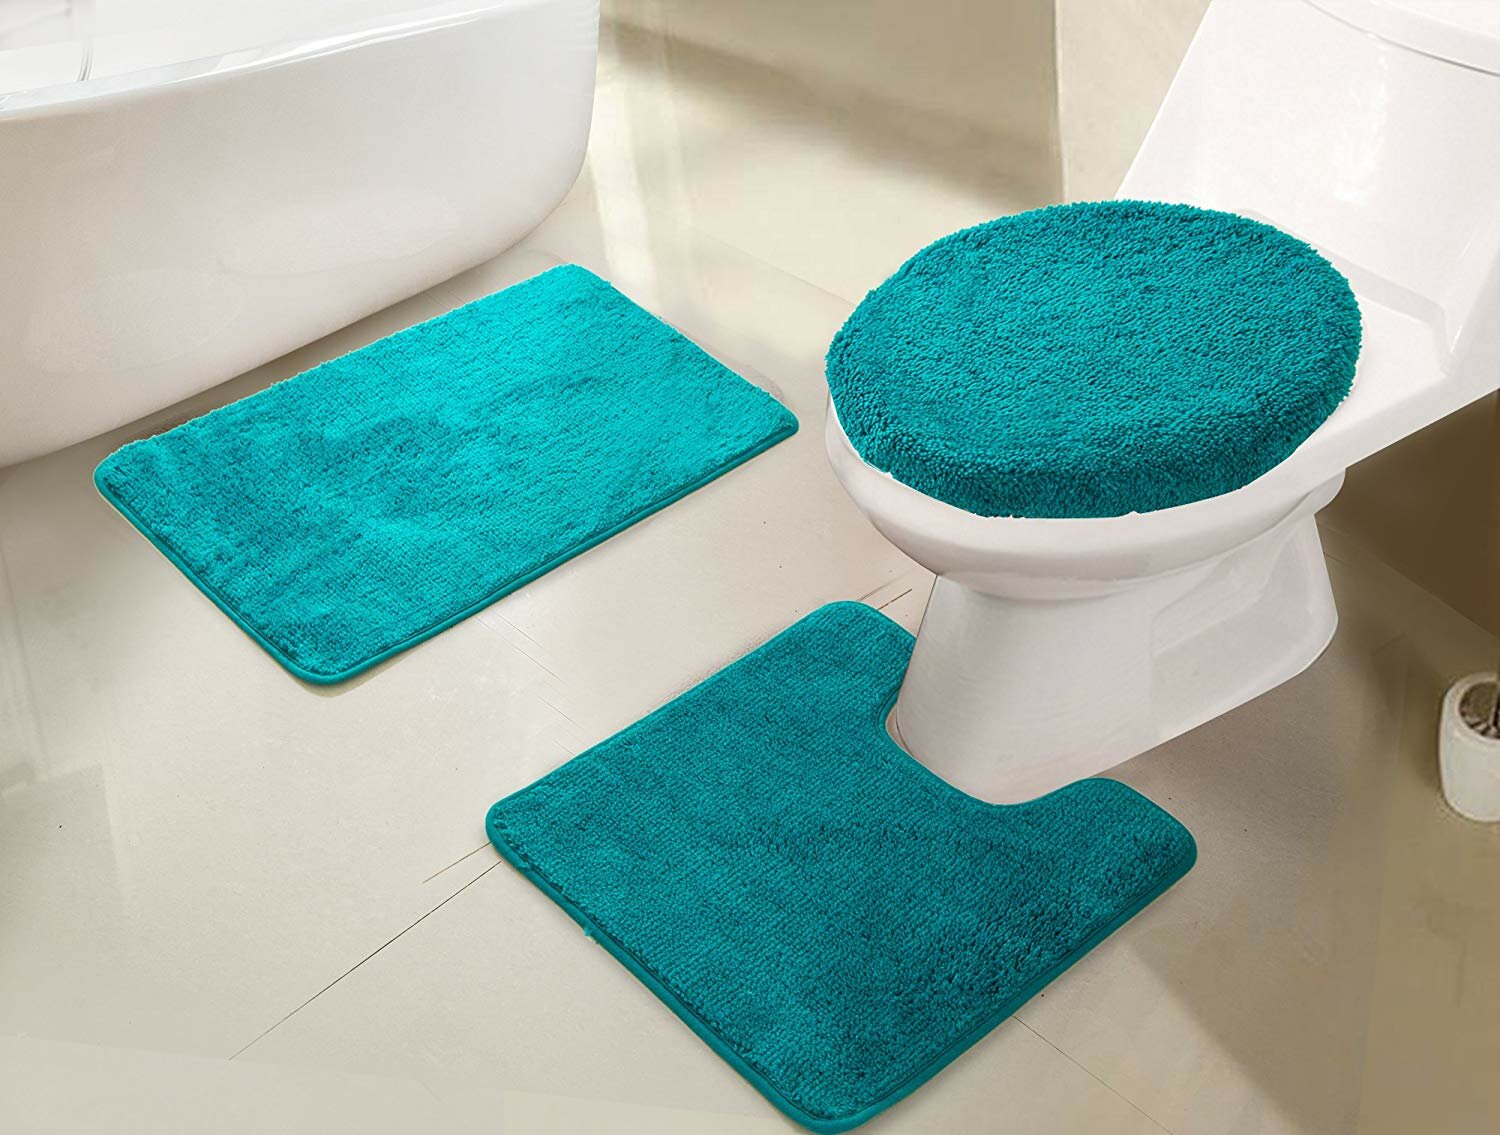 bathroom toilet rug